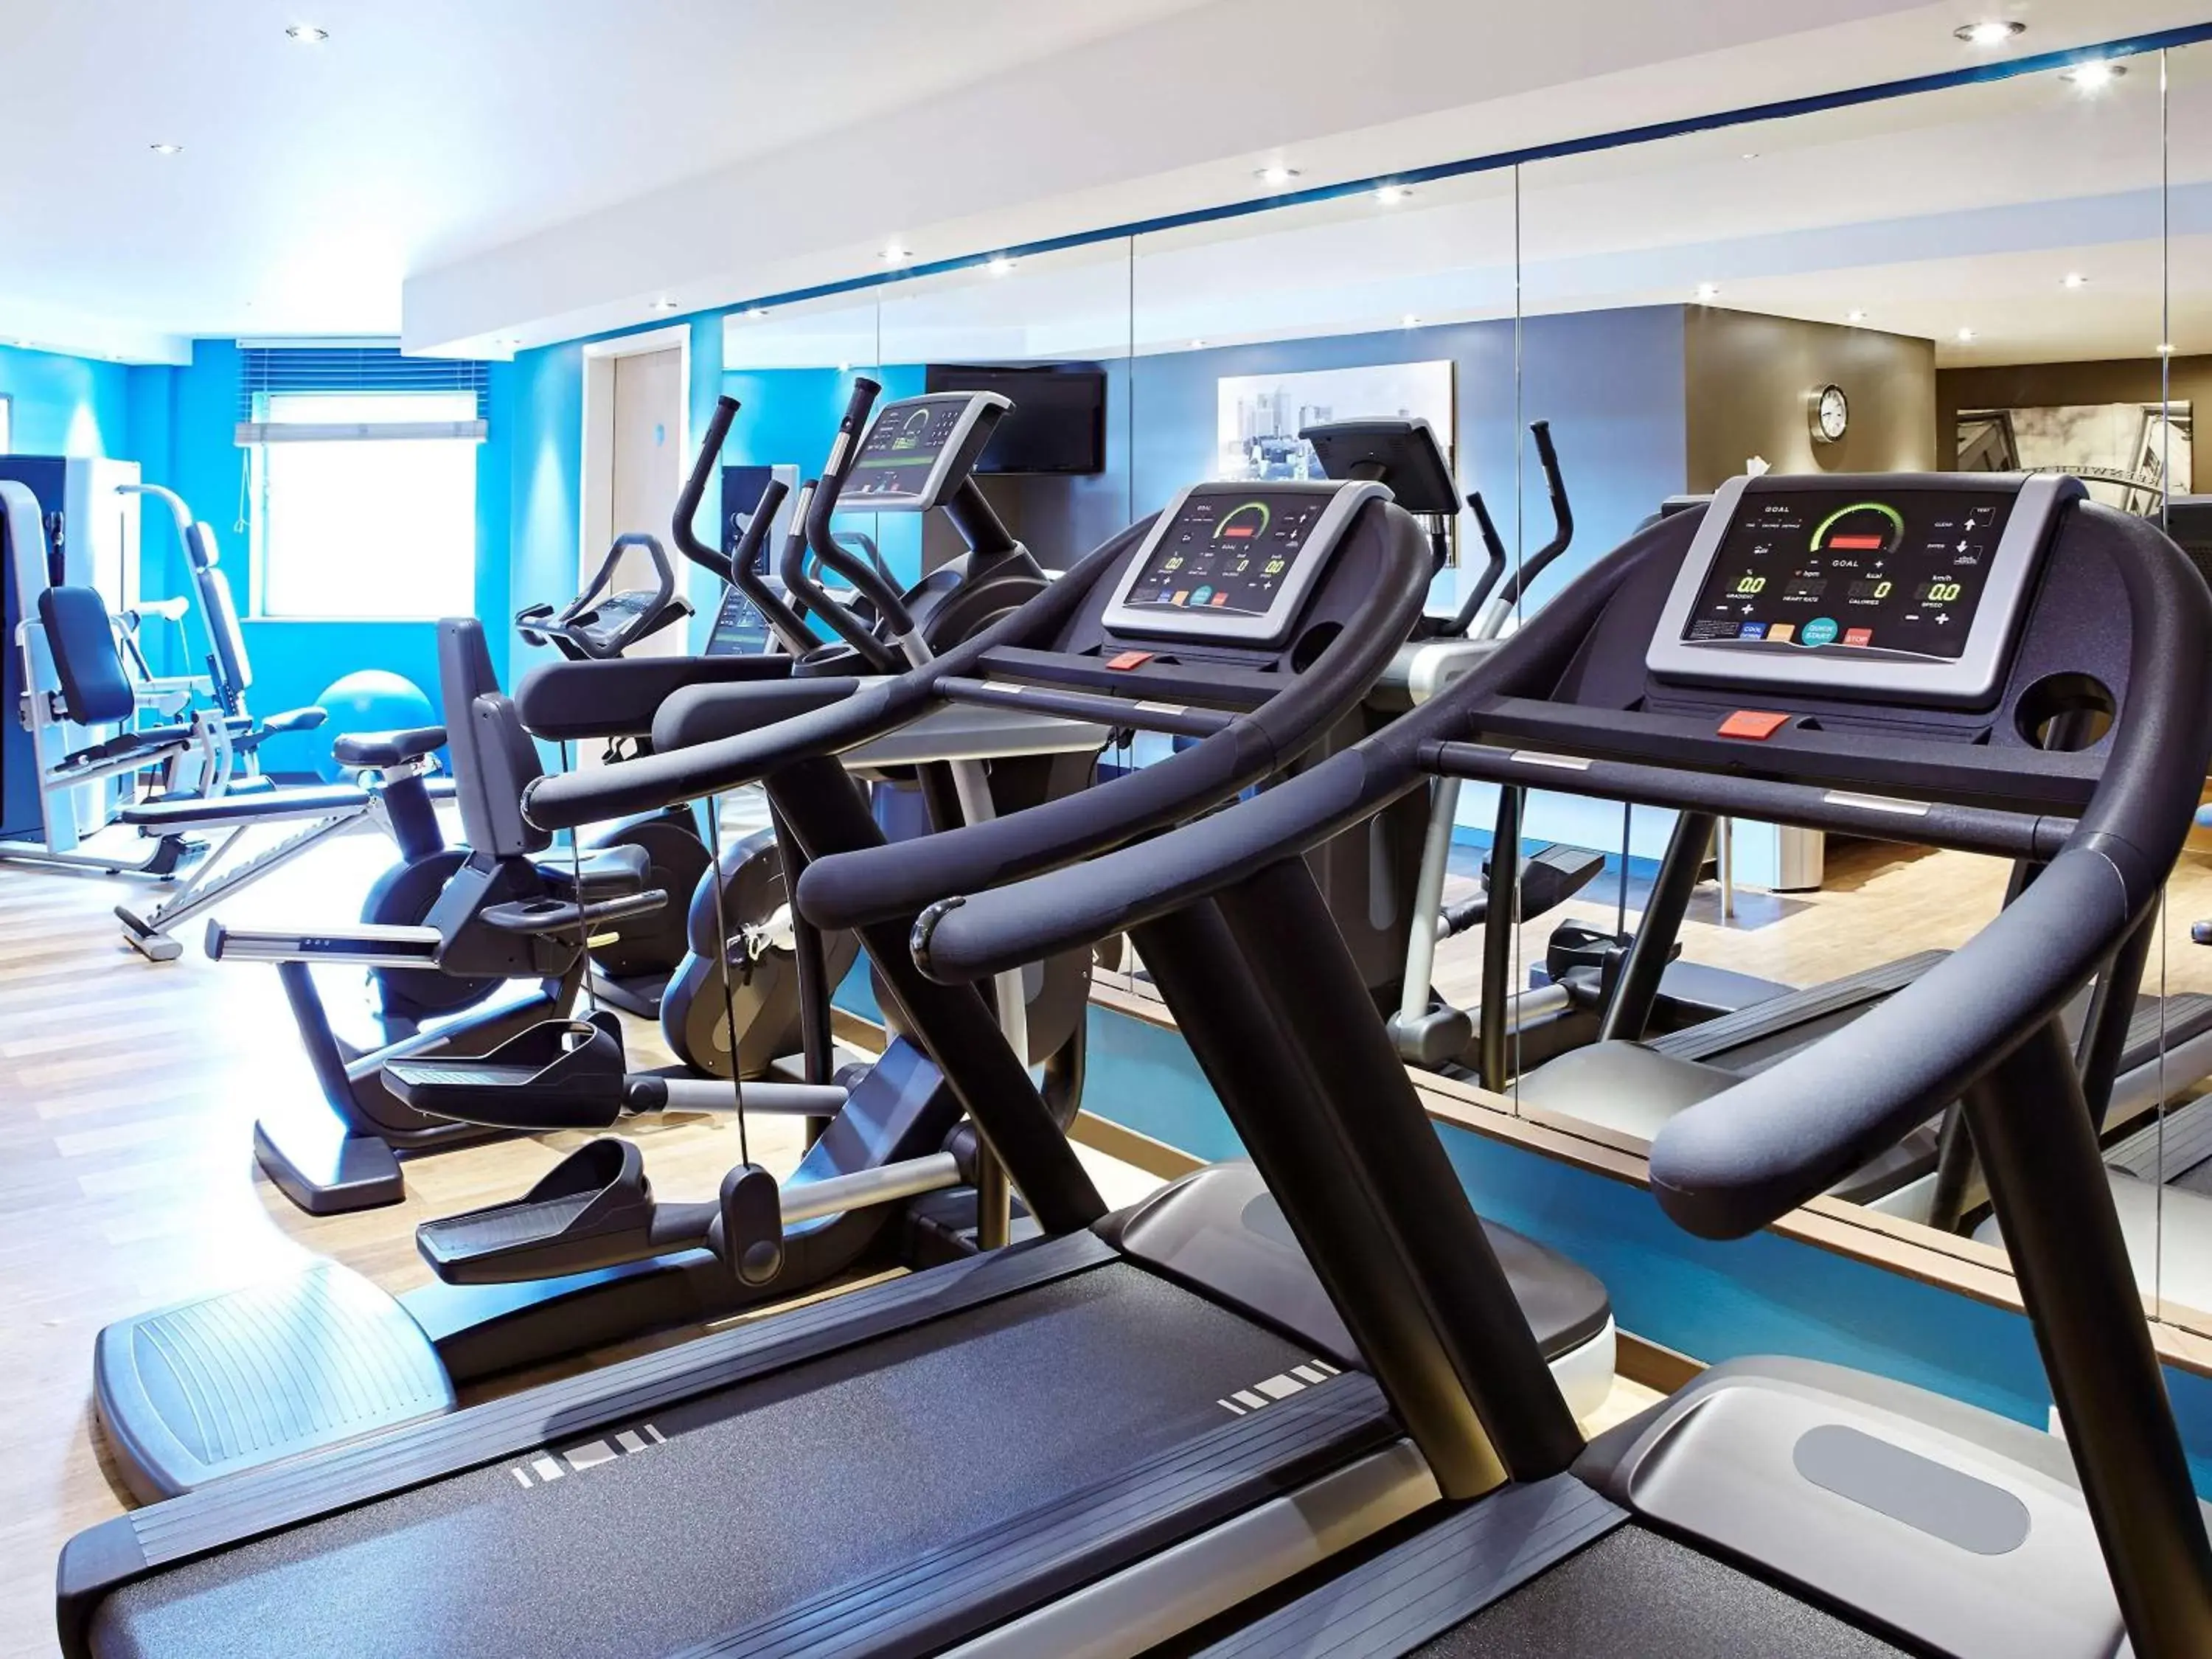 Fitness centre/facilities, Fitness Center/Facilities in Novotel London Greenwich